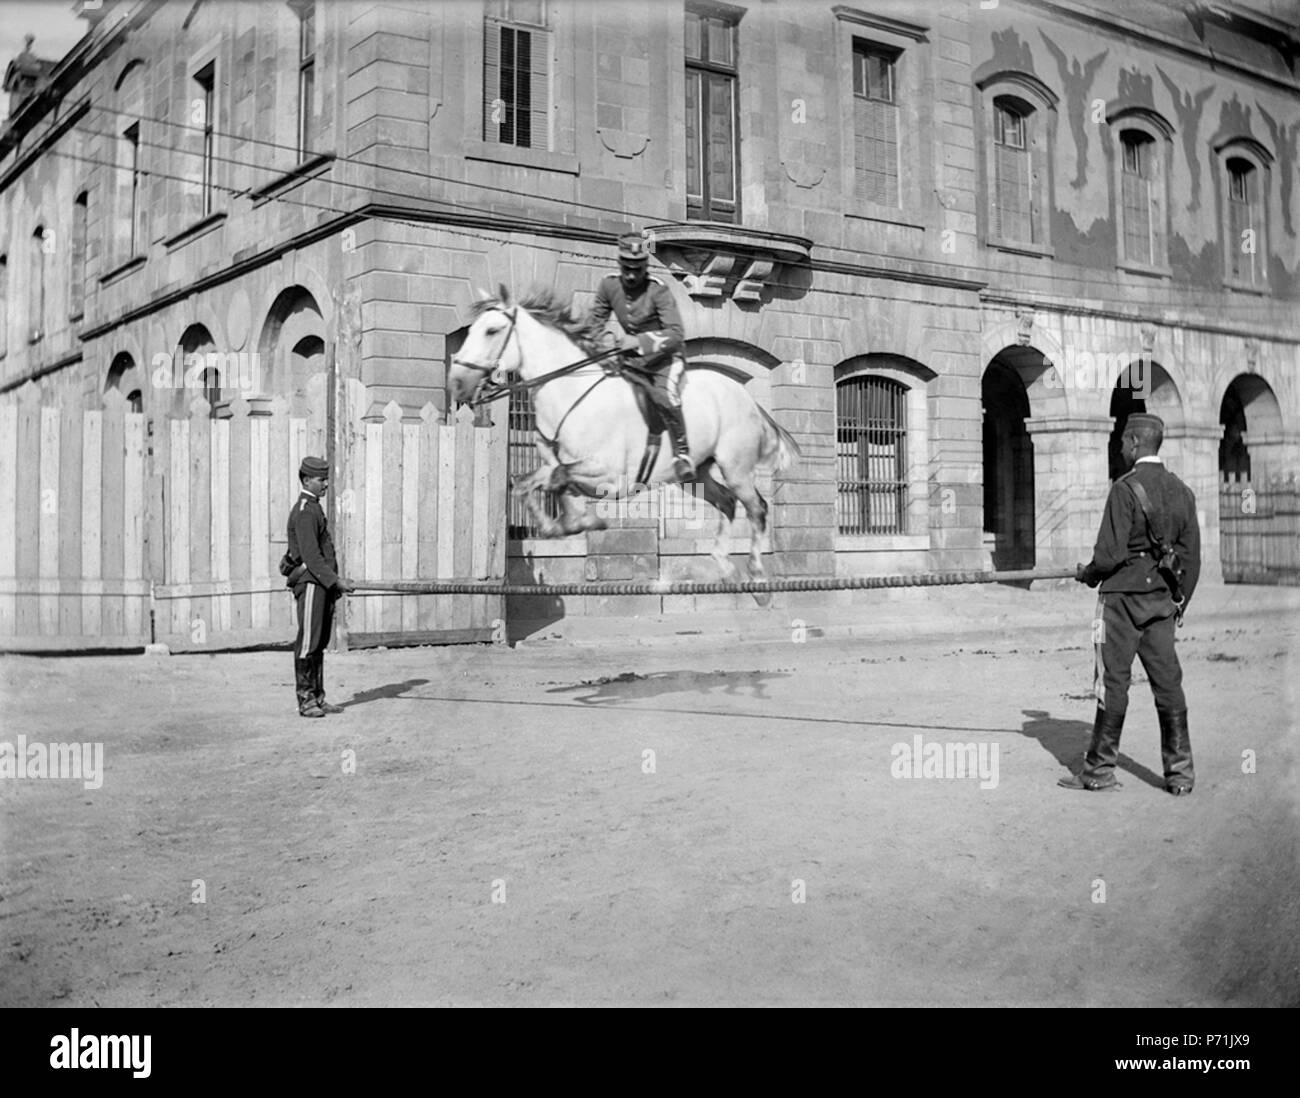 8 Baldomer Gili Roig. Stimmt Hípic Internacional de Barcelona (Pati d'Armes de la Ciutadella), 1905 - 1910 Stockfoto